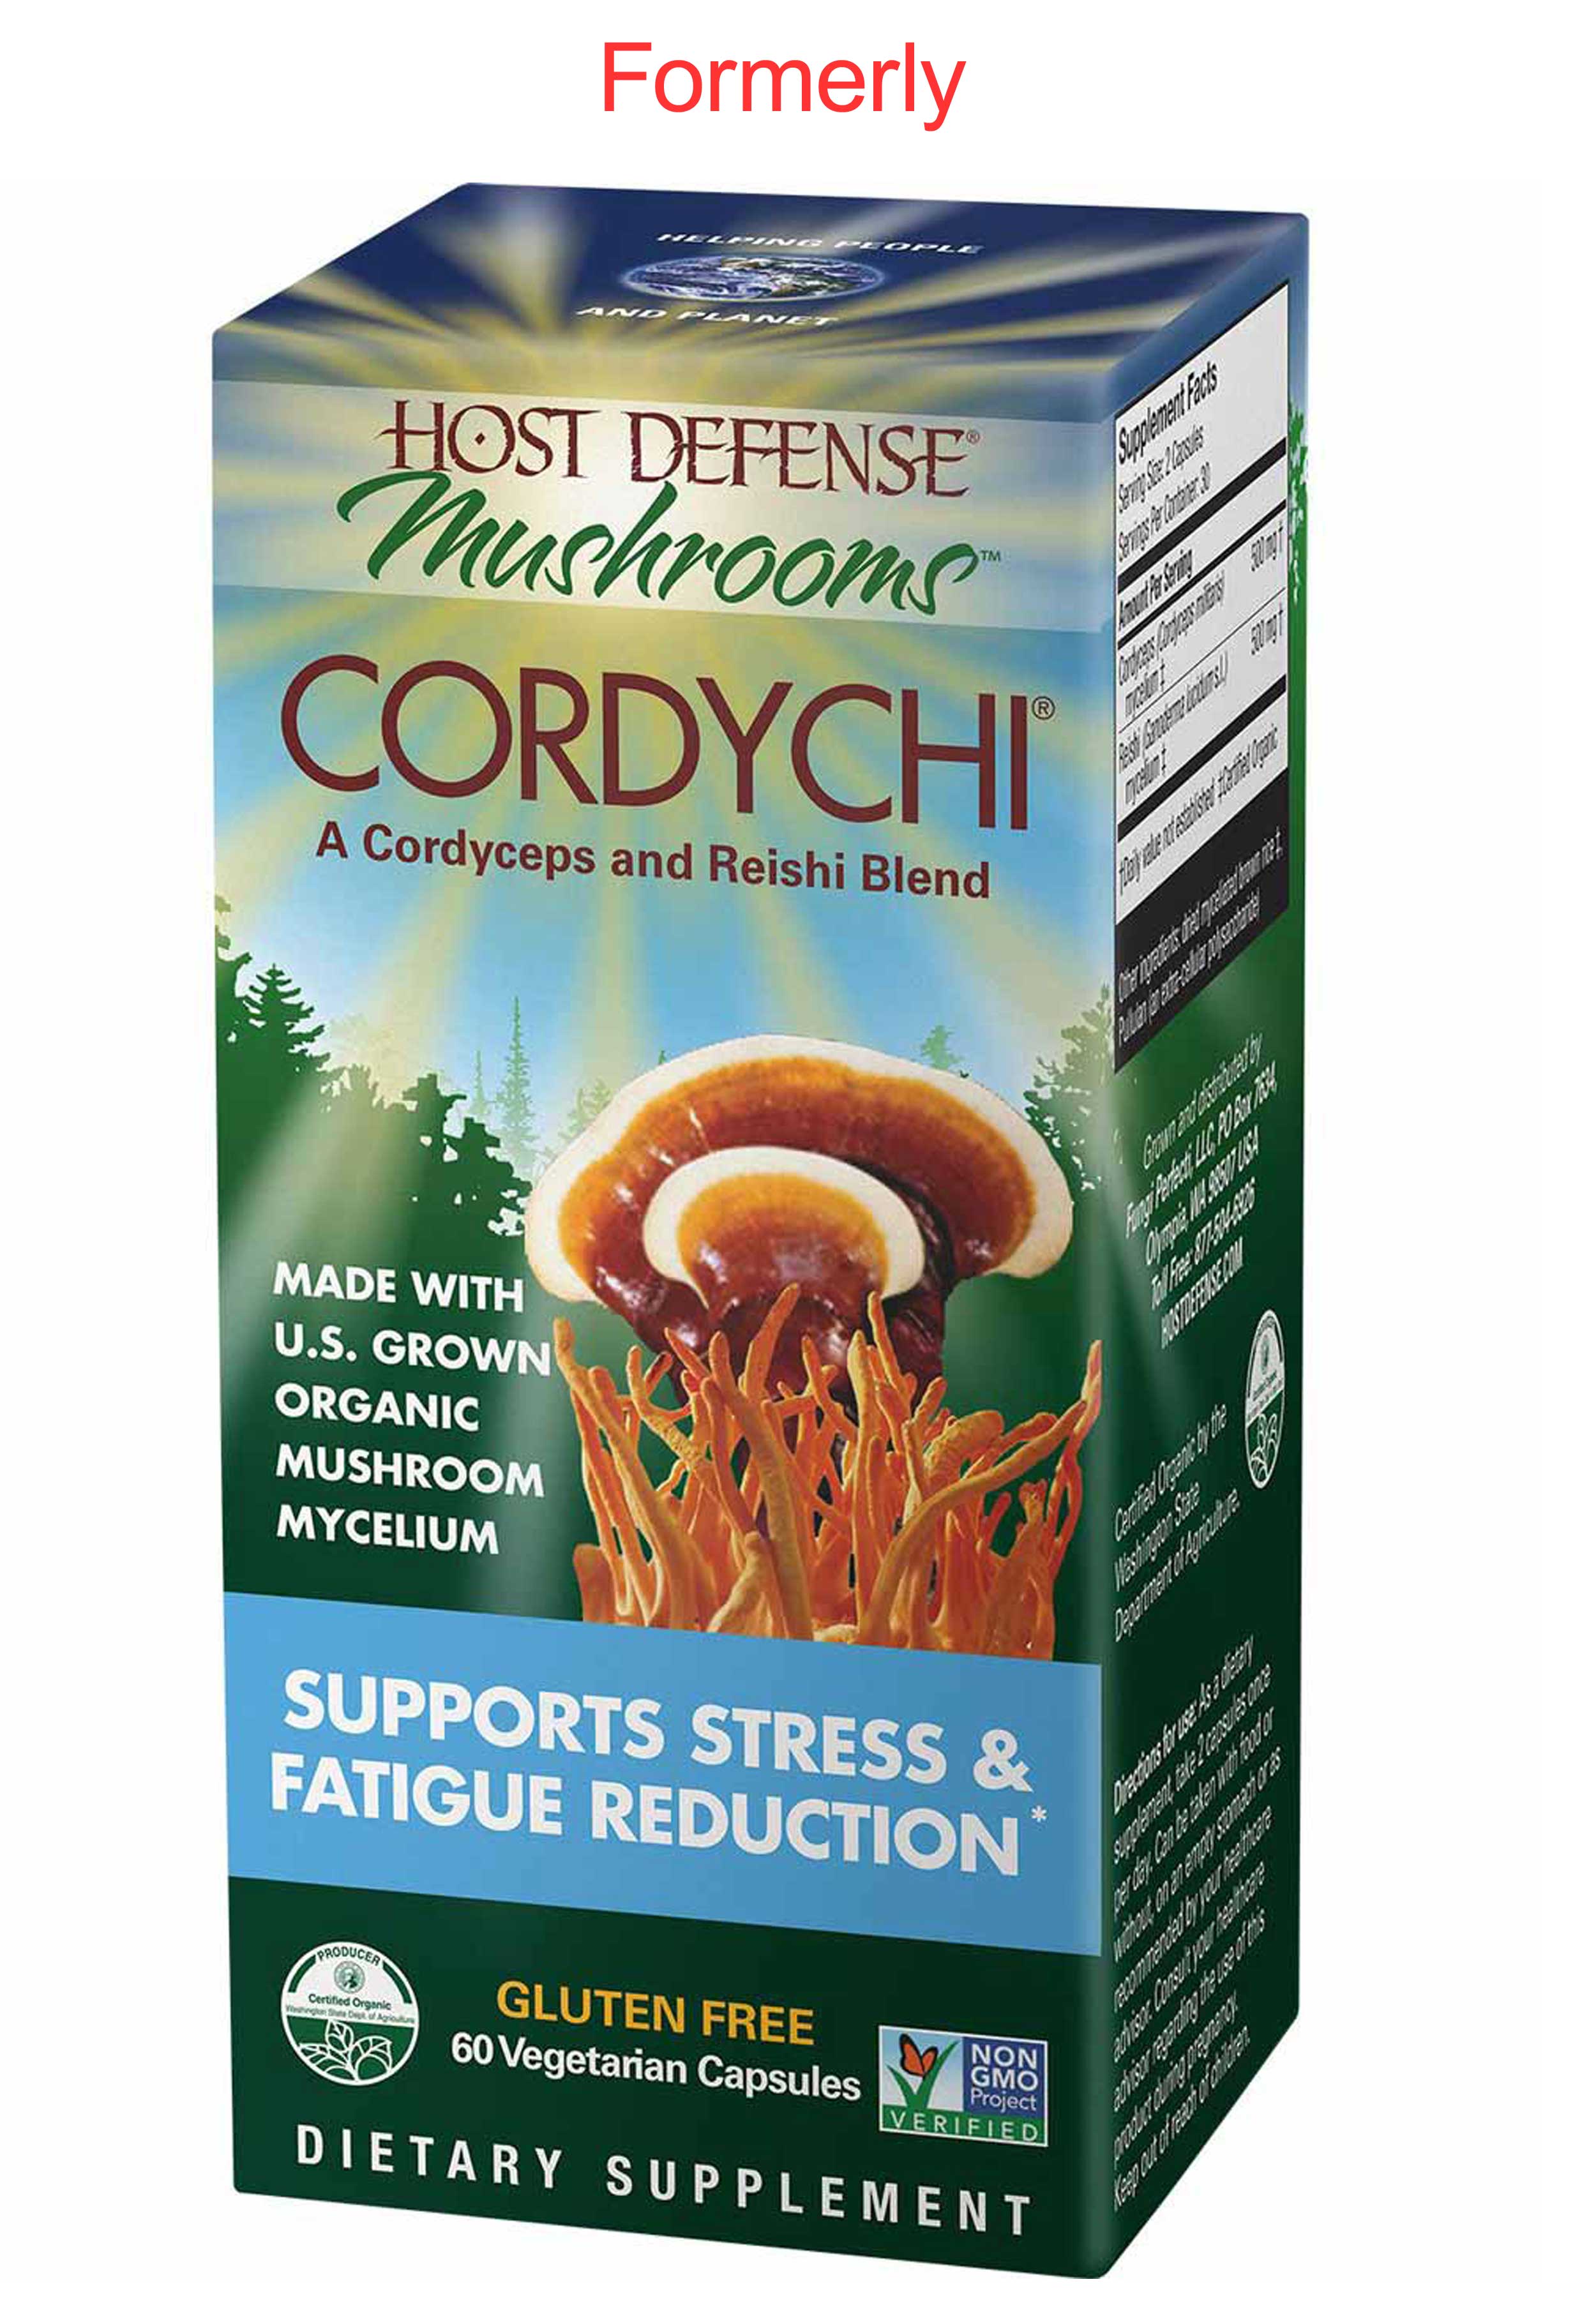 Host Defense CordyChi Capsules Formerly